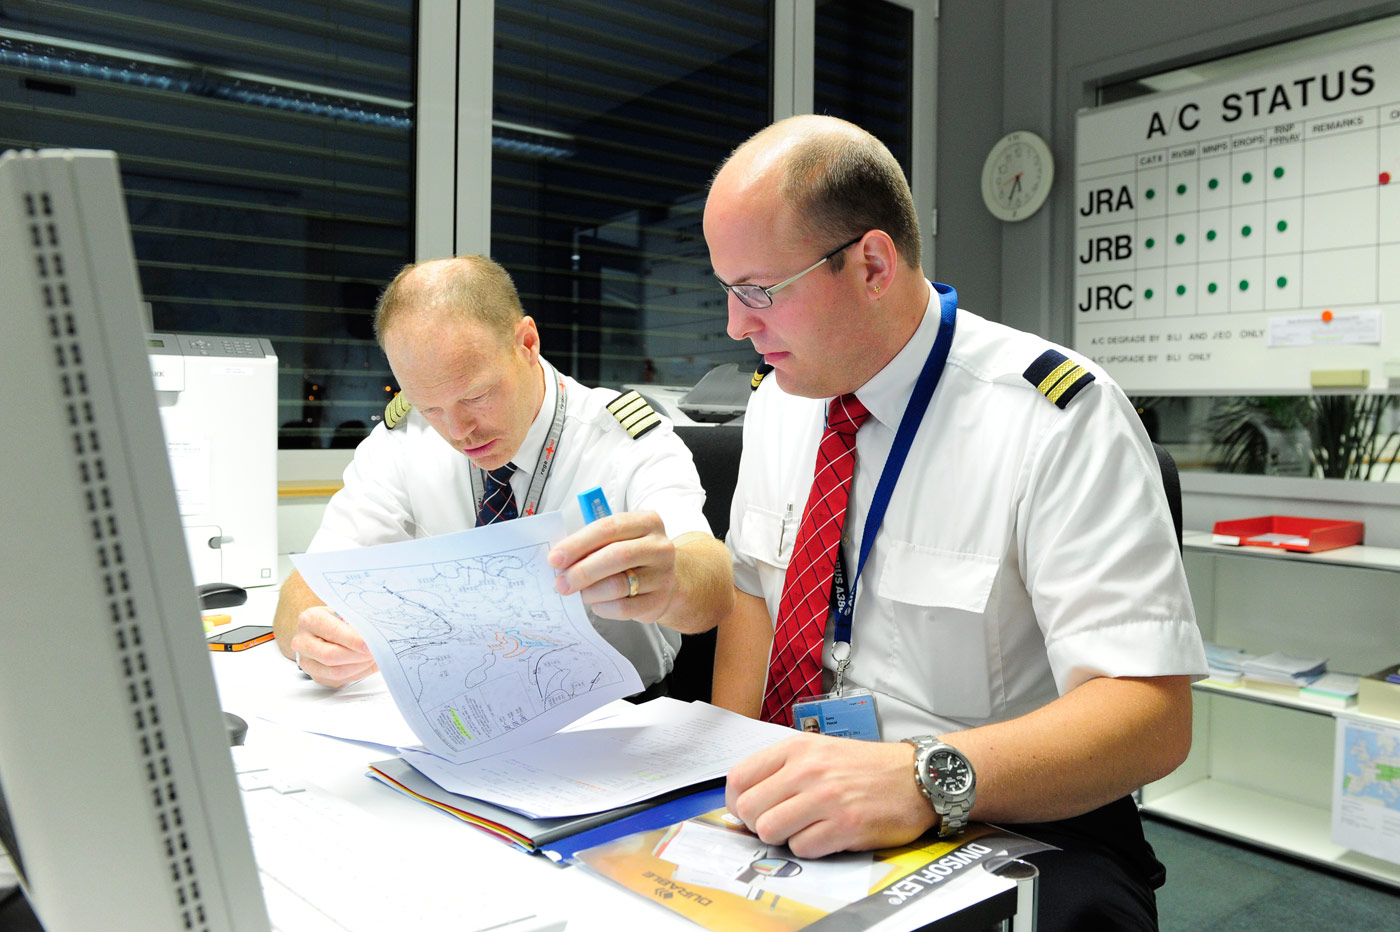 Pilots debriefing, Rega Headquarters Zurich Airport, 2012